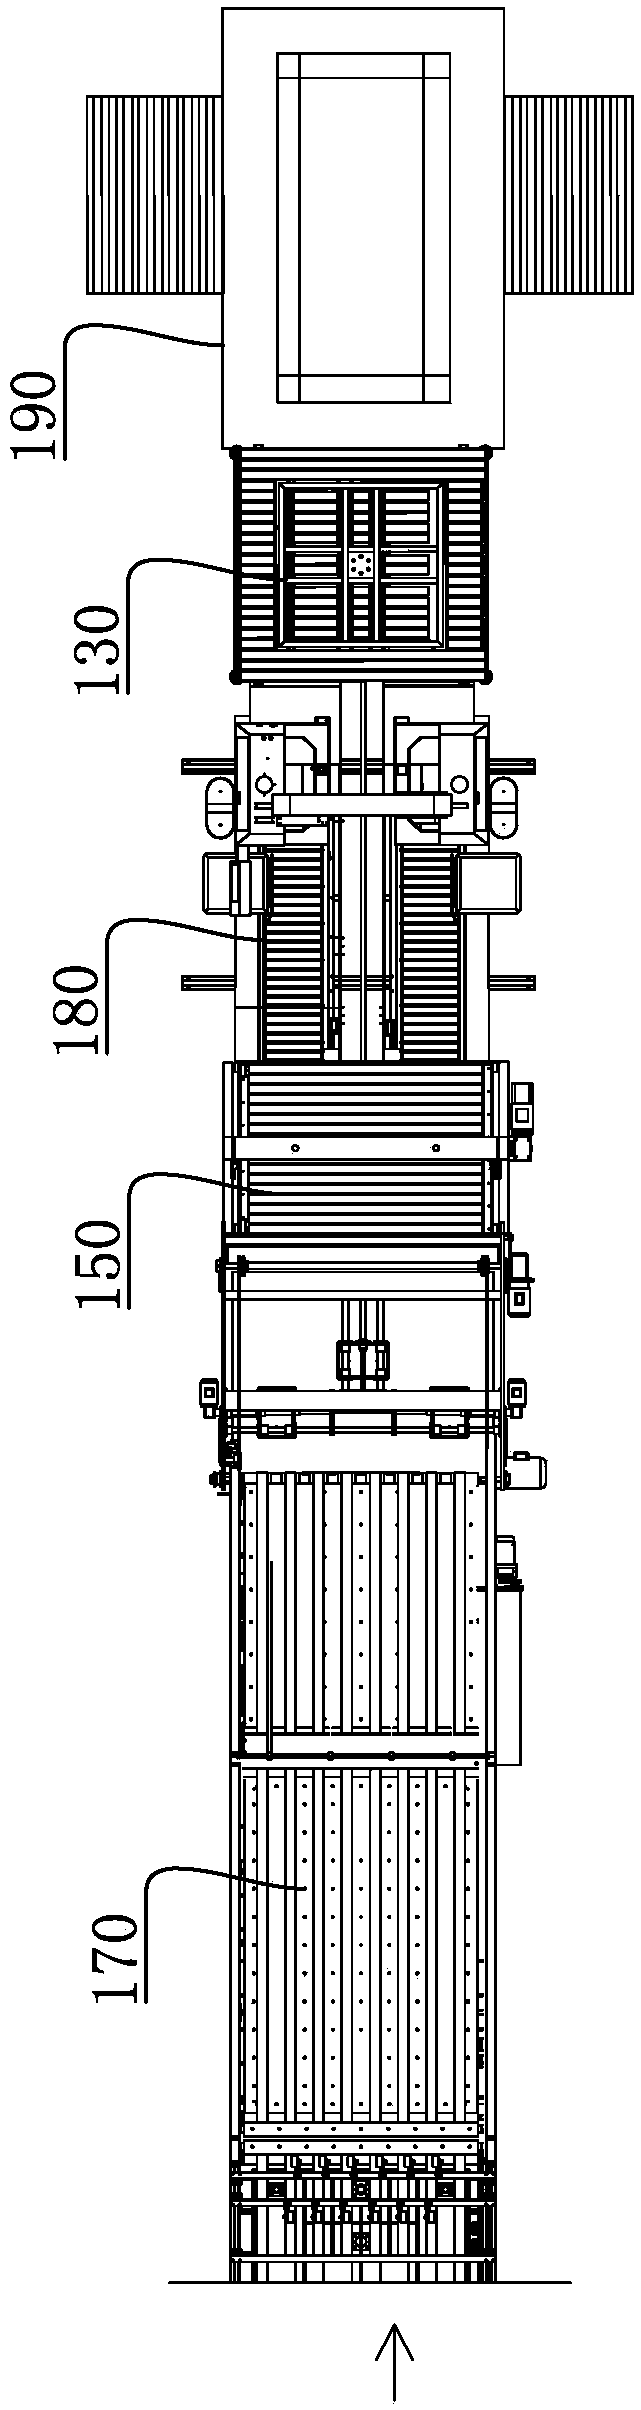 Corrugated box linkage production method and production line